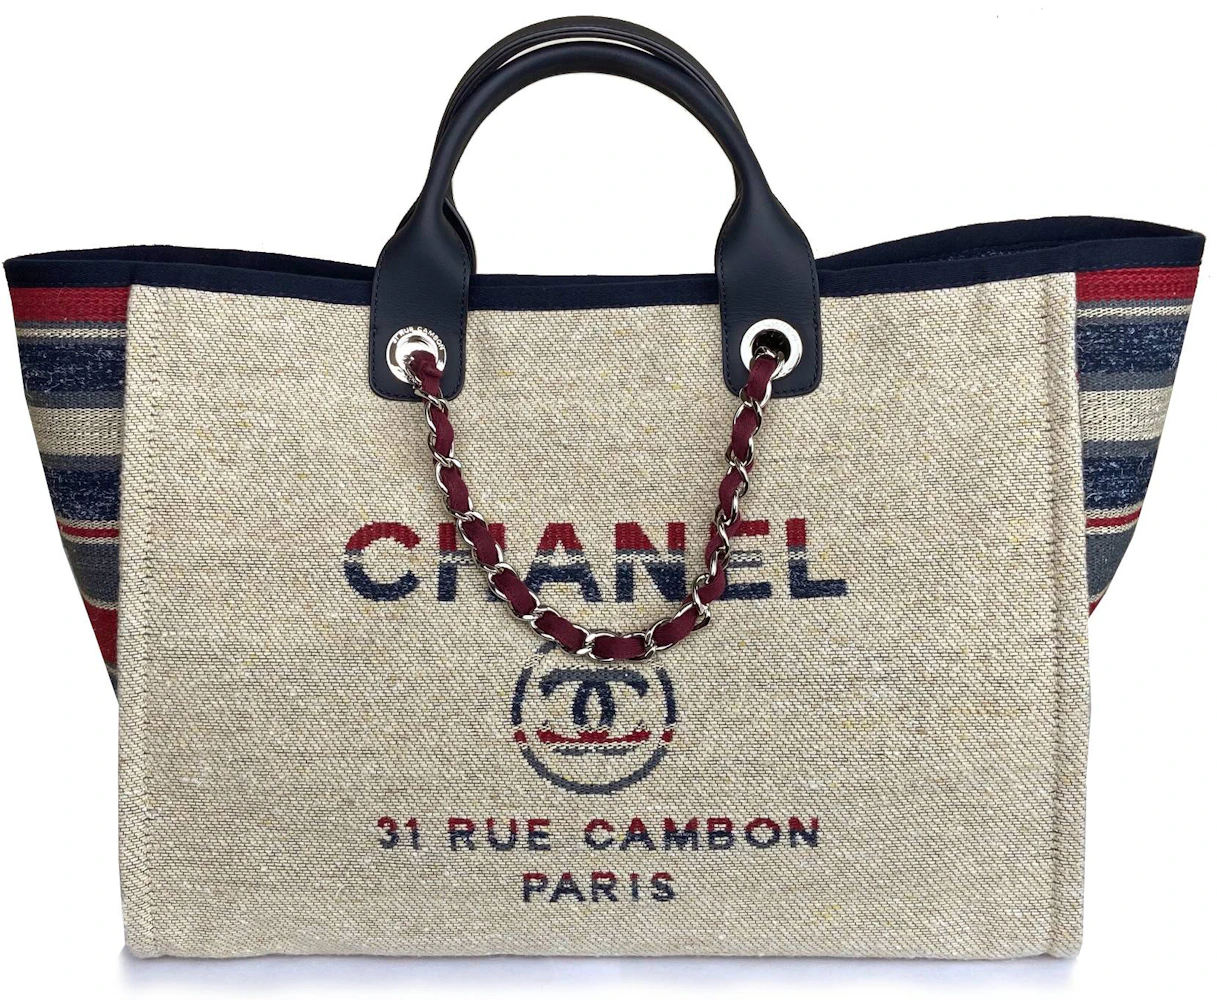 Chanel Ecru Beige Canvas Medium Deauville Tote Bag